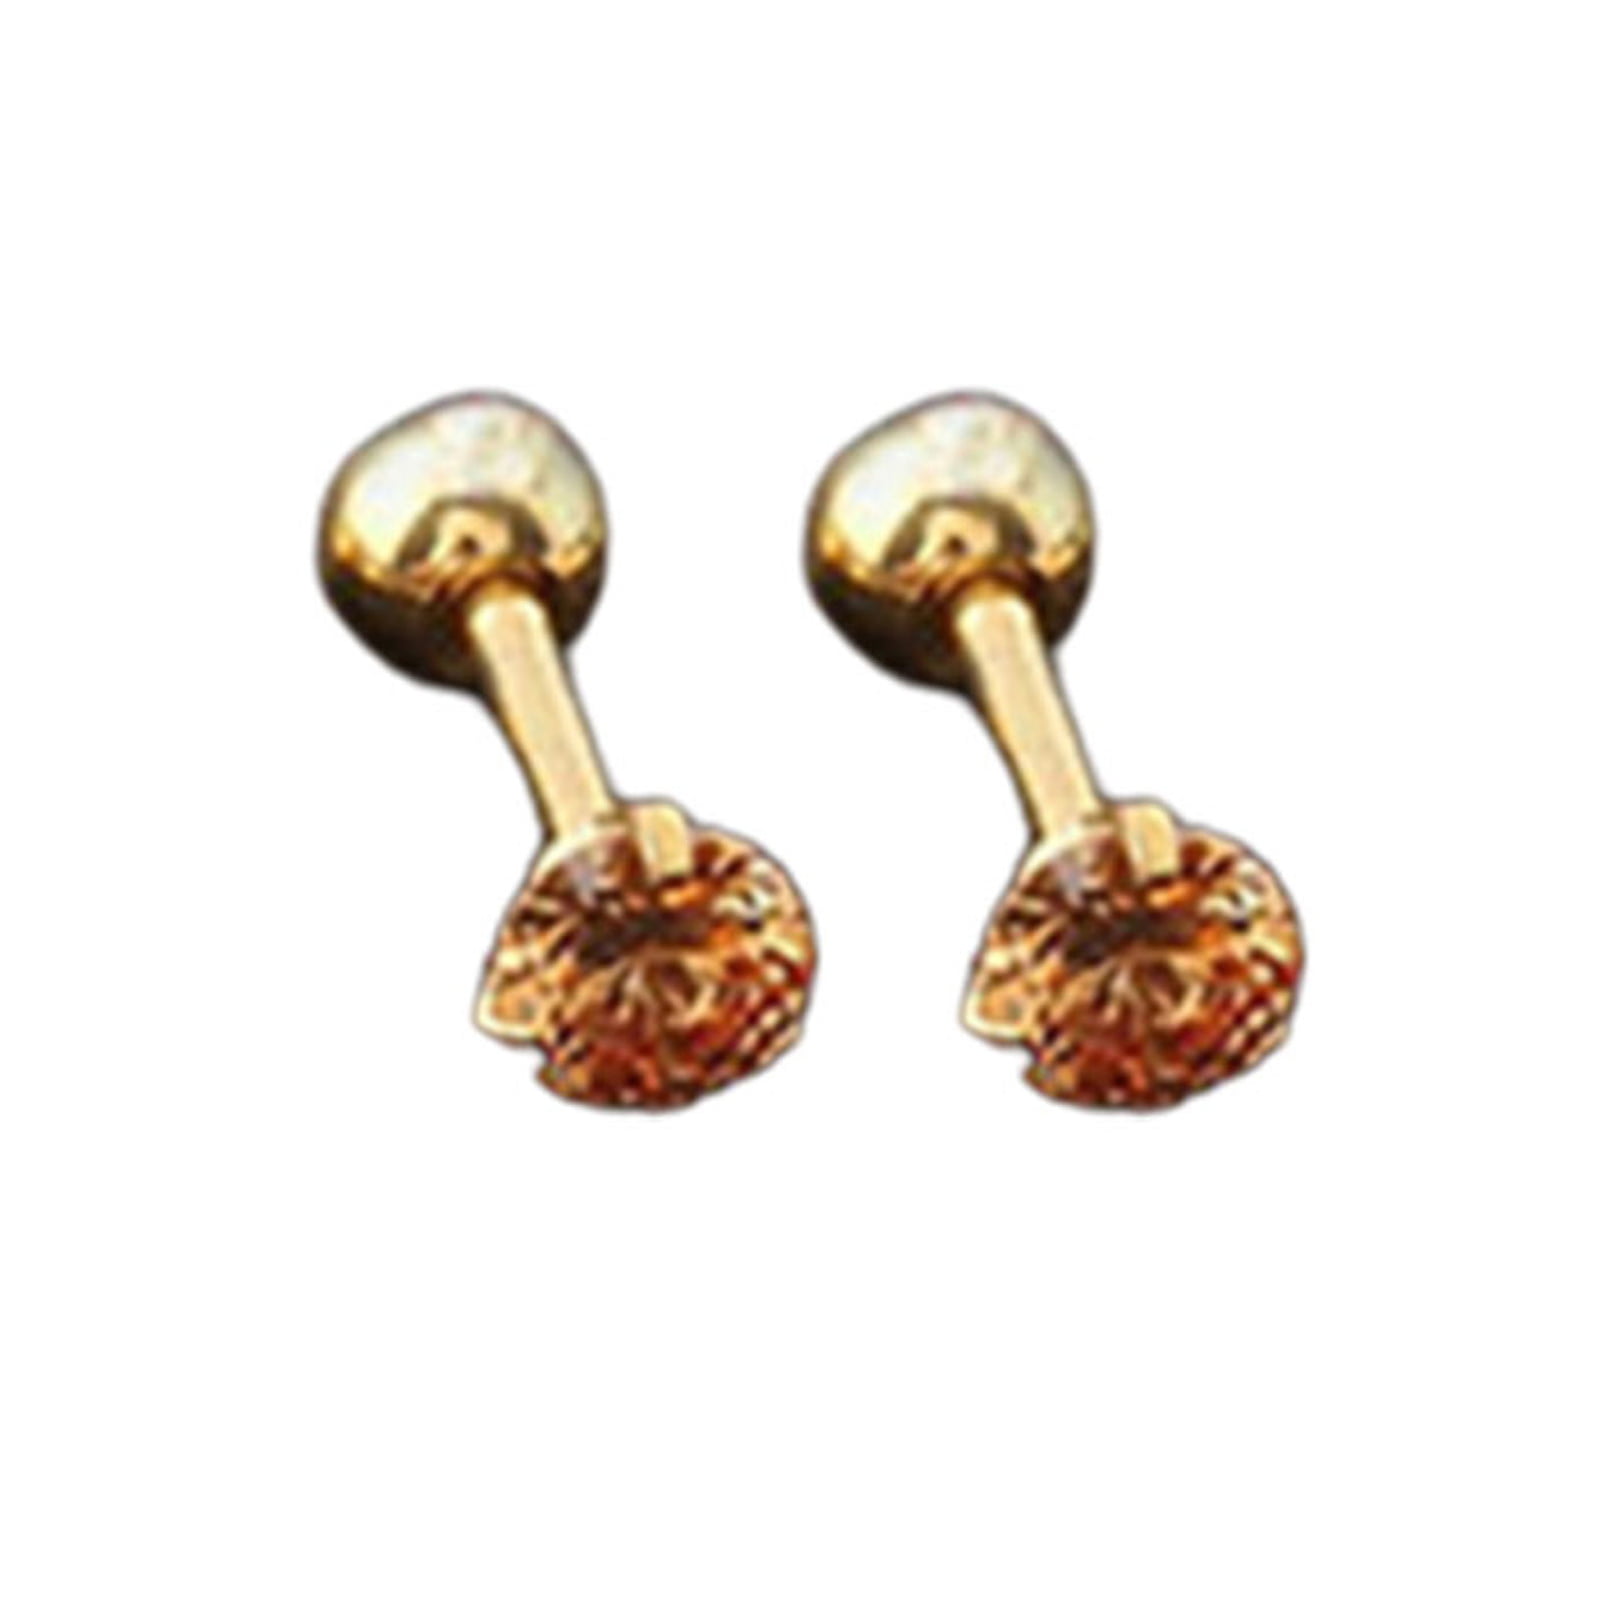 CZ Prong Star Crystal Earring Jewelry Ear Stud Stainless Steel Body Piercing